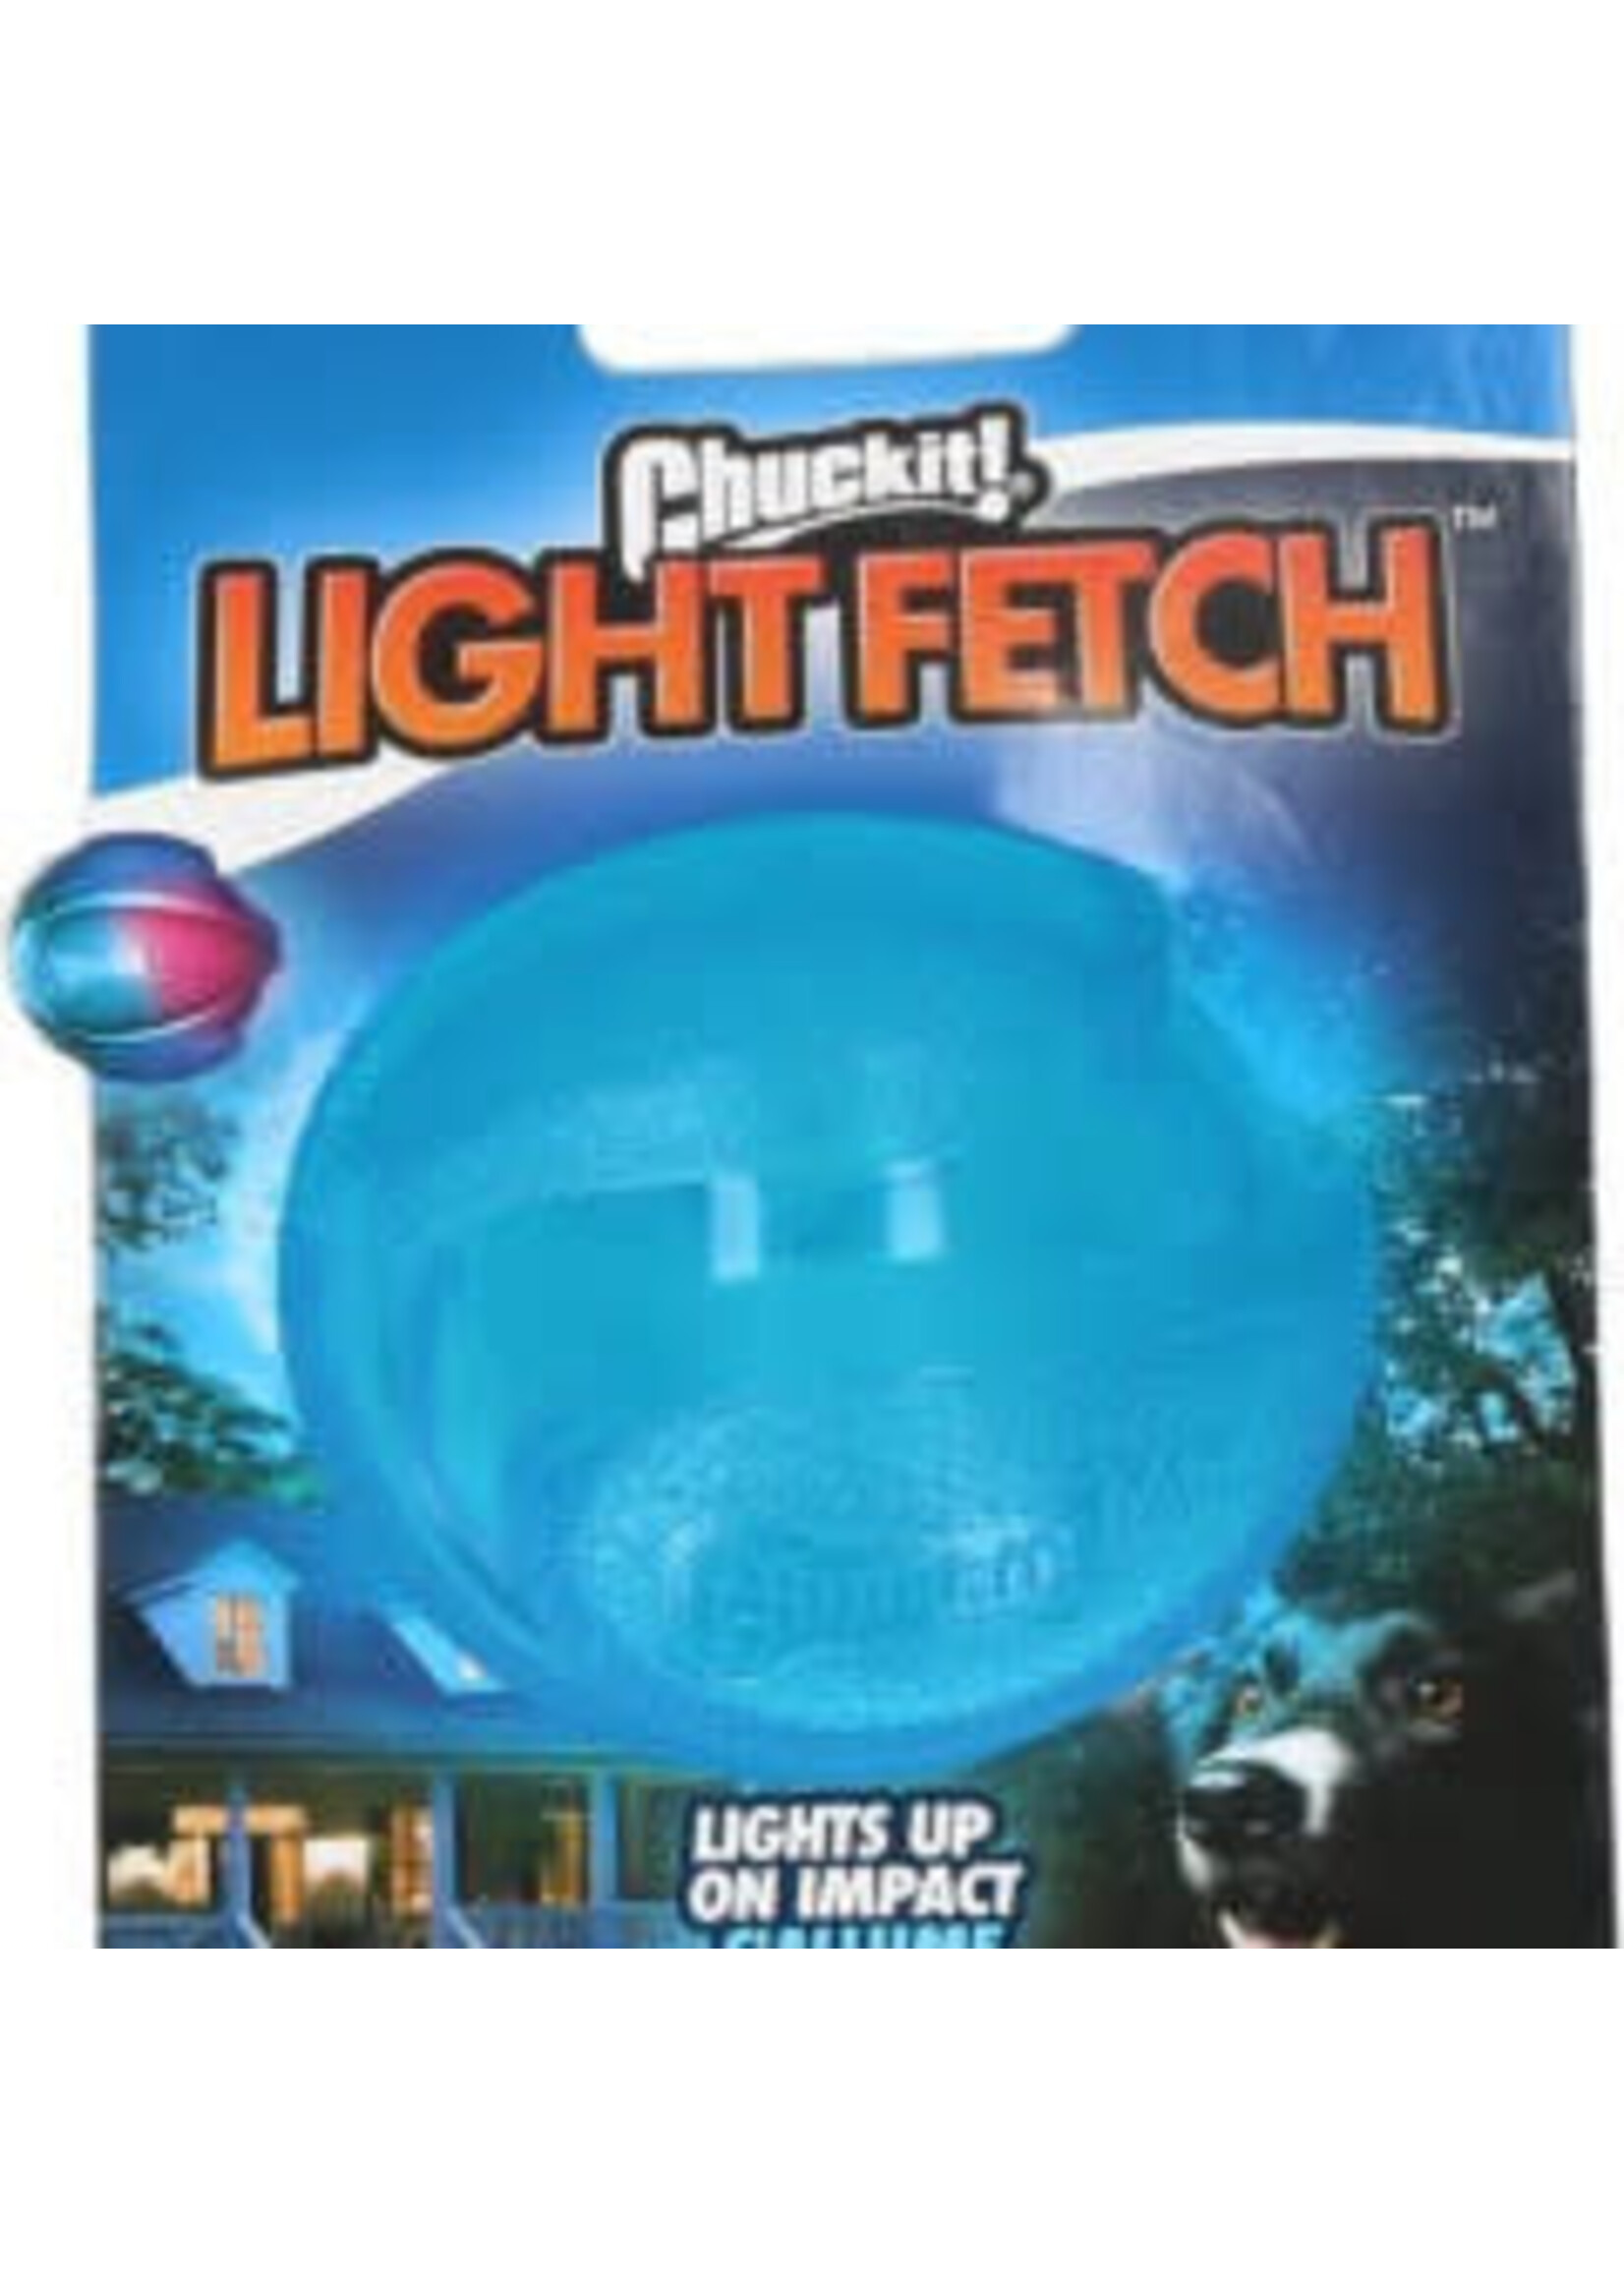 Chuck It! Chuck it! - Light Fetch  Medium